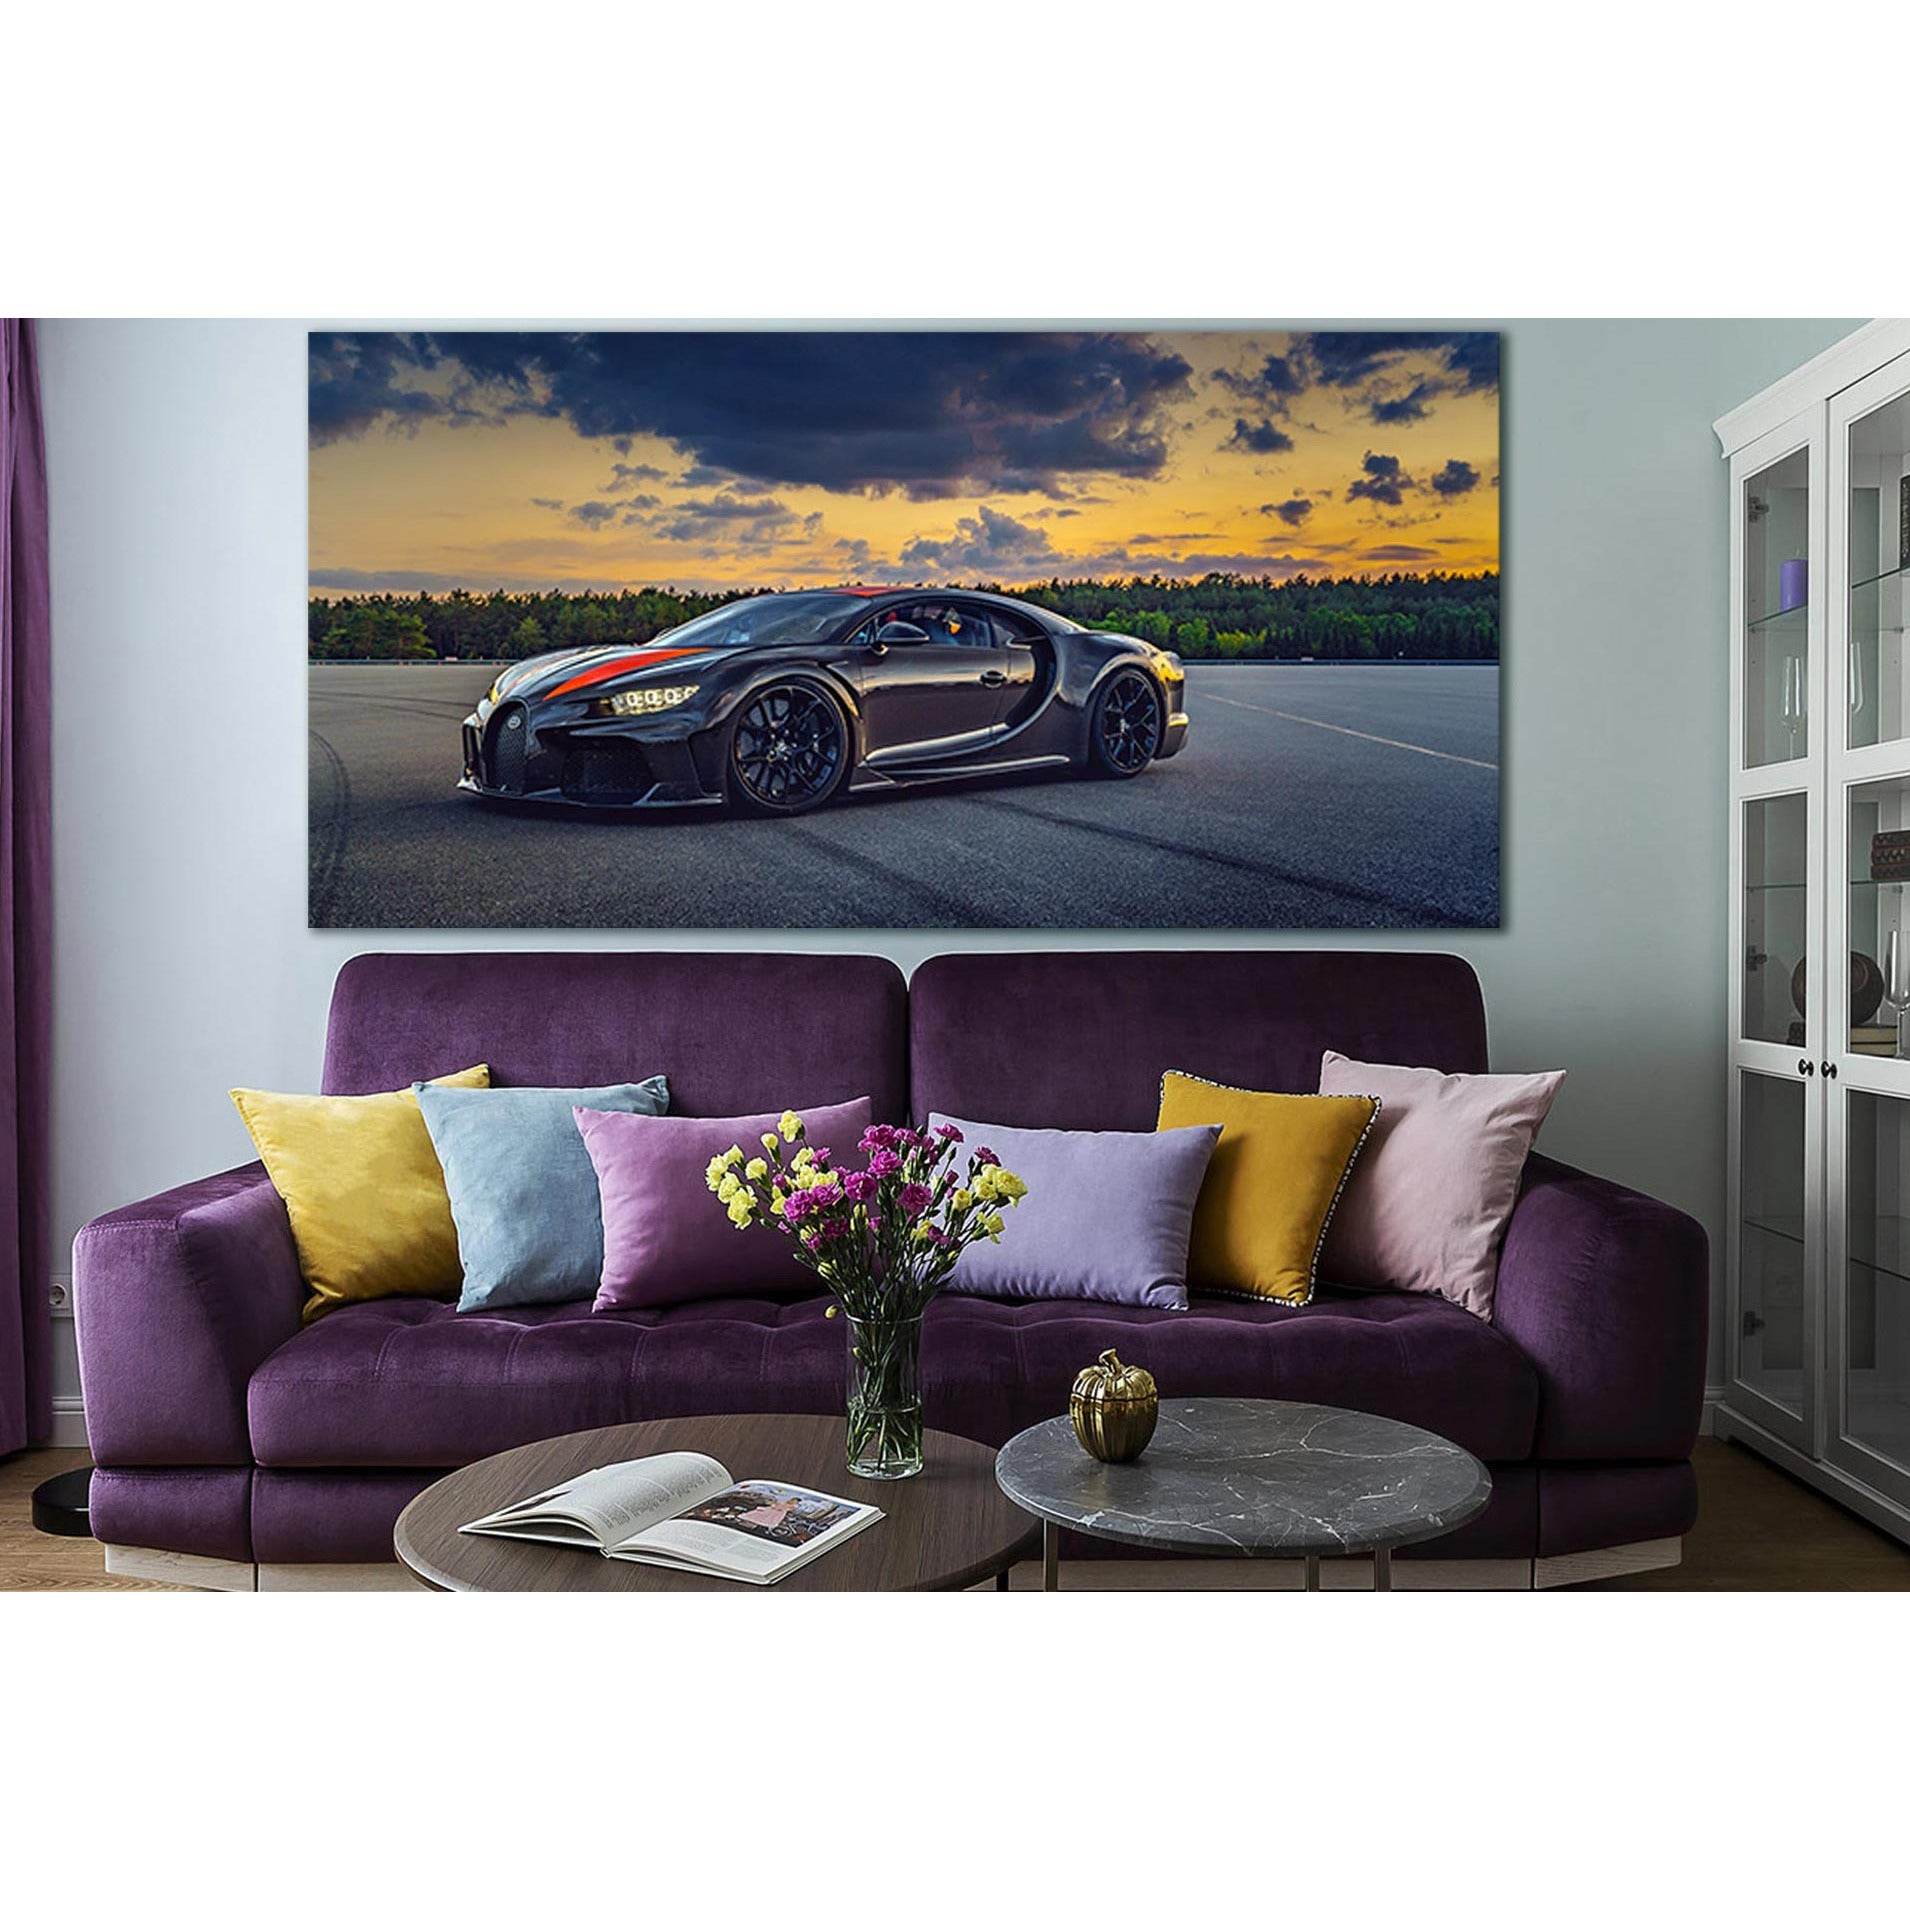 Luxury Beautiful Black Sports Car №SL1436 Ready to Hang Canvas Print